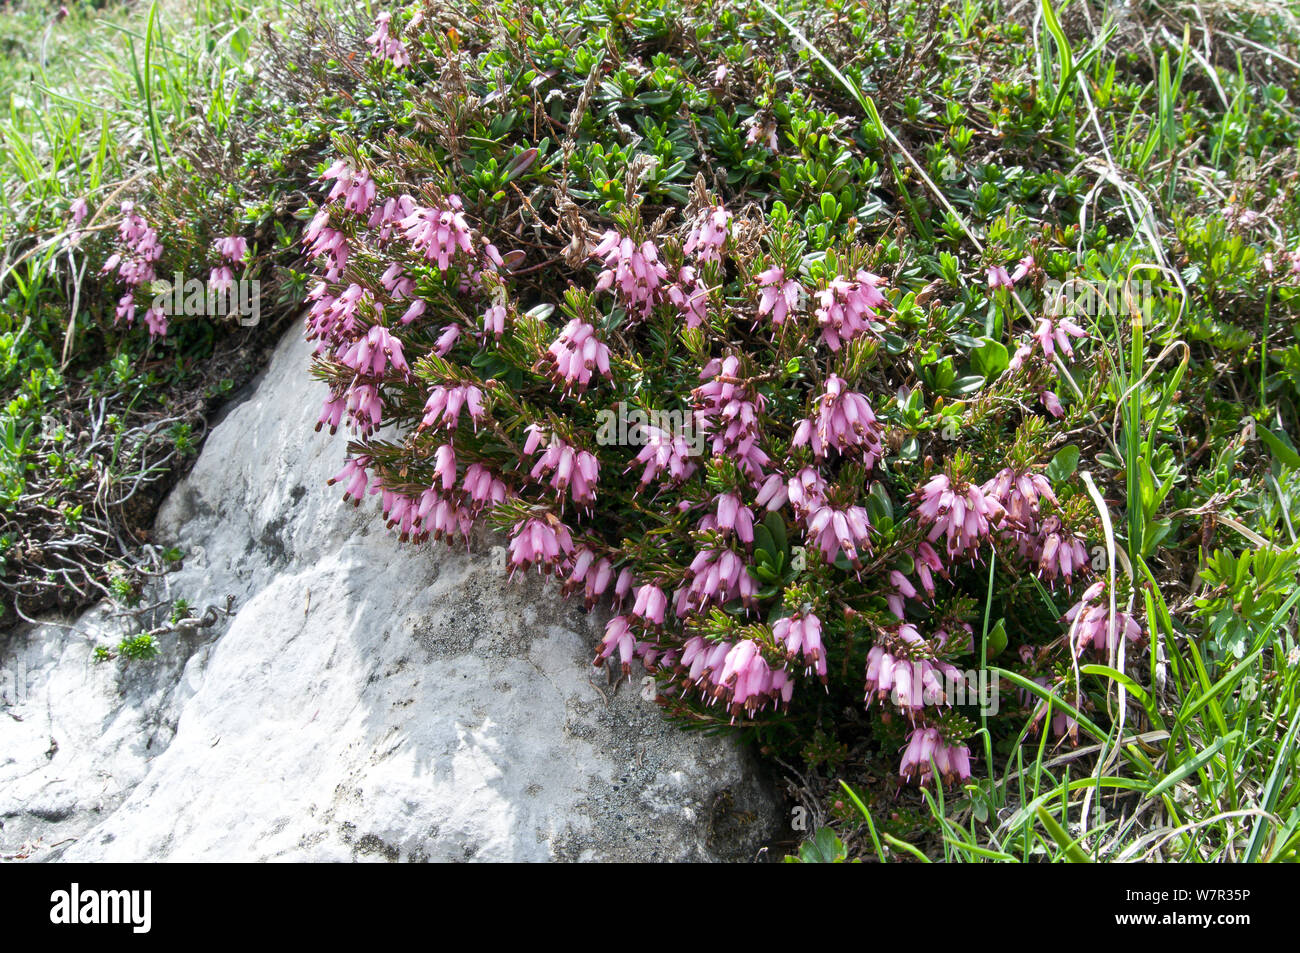 Spring heath (Erica herbacea / carnea) in flower, Monte Spinale, alpine zone, Madonna di Campiglio, Brenta Dolomites, Italy, July Stock Photo